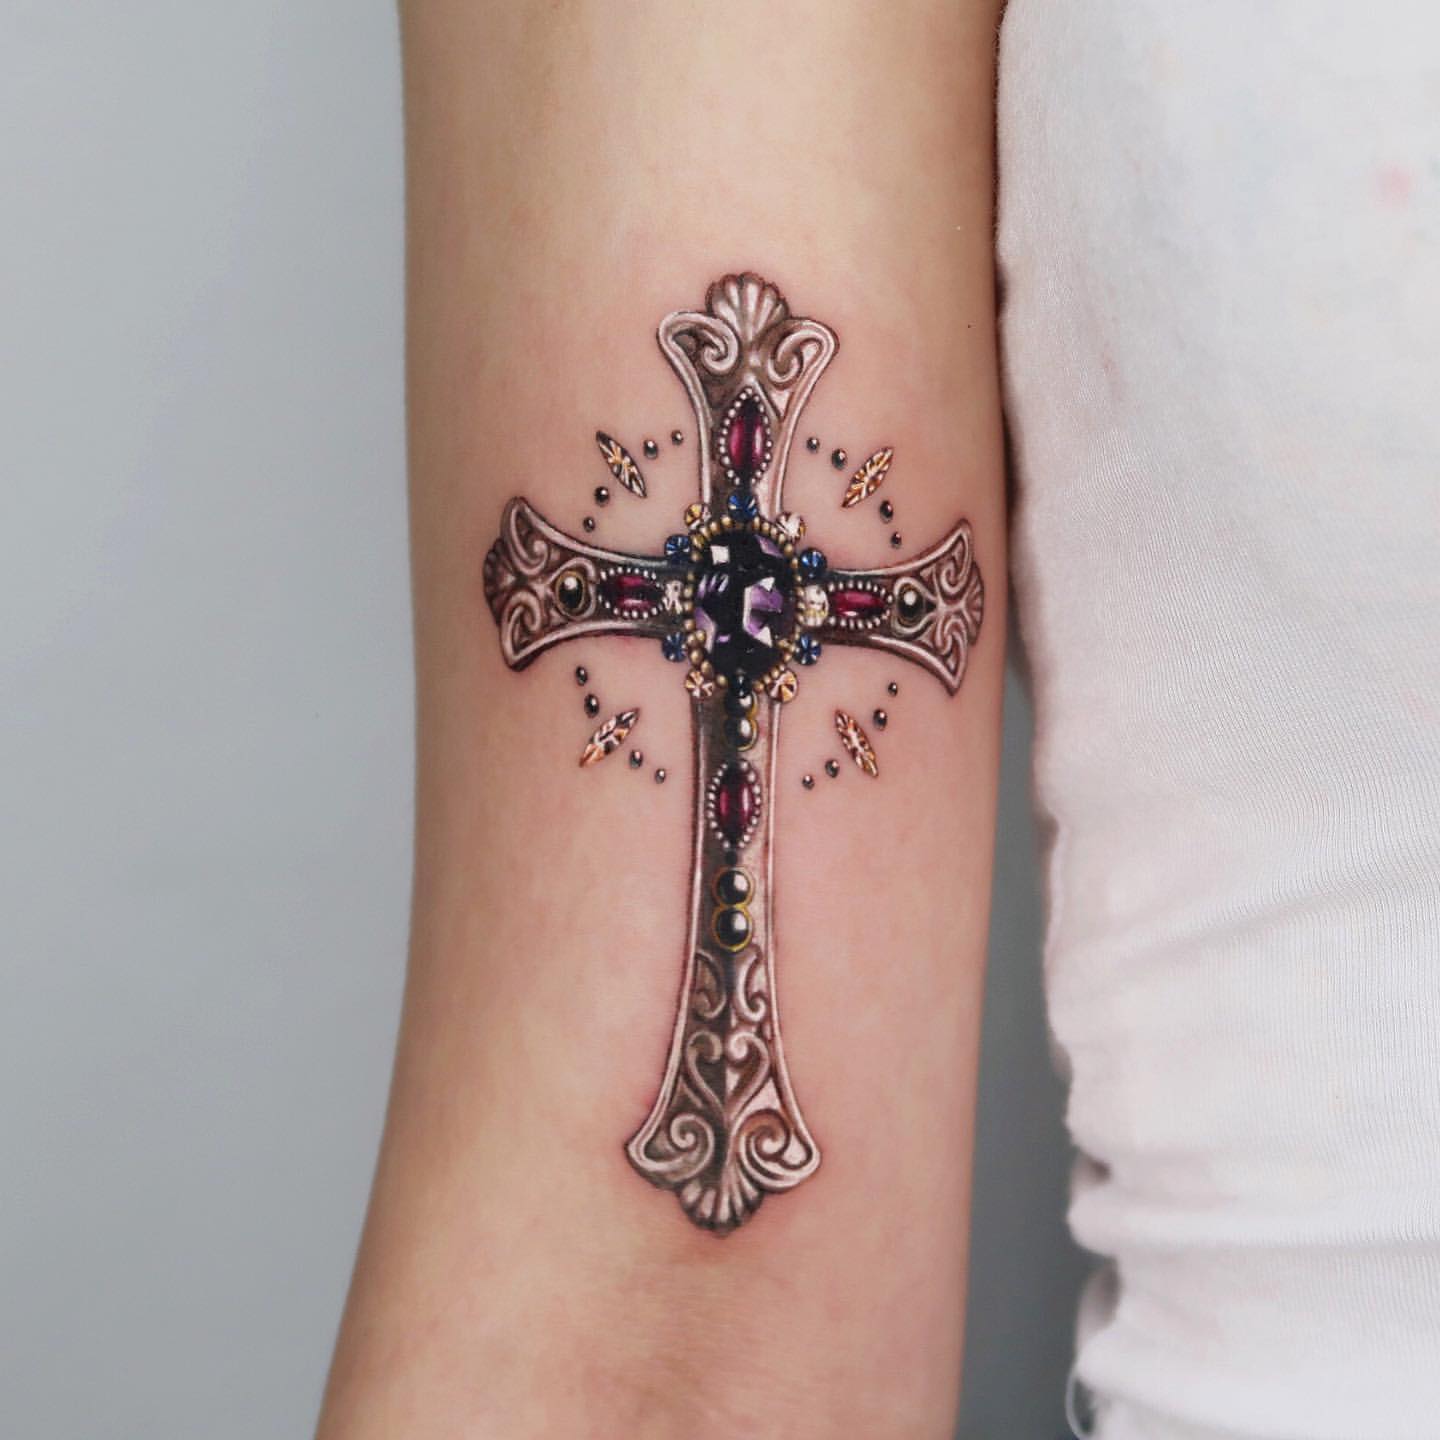 Christian Tattoos for Women 9